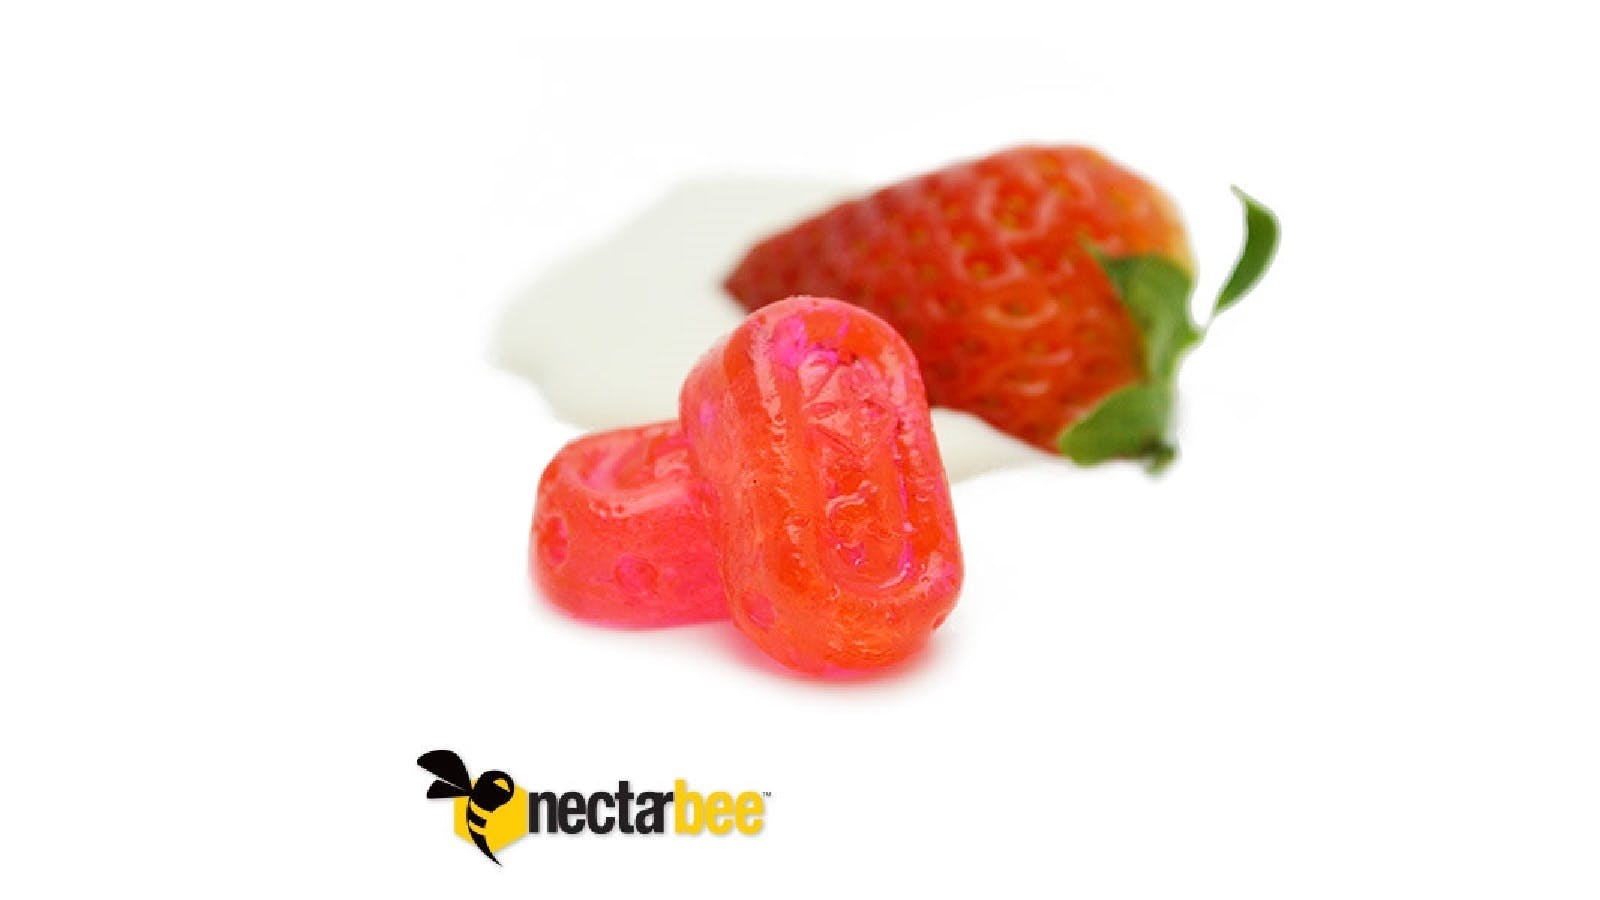 edible-nectarbee-strawberries-and-cream-lozenges-80mg